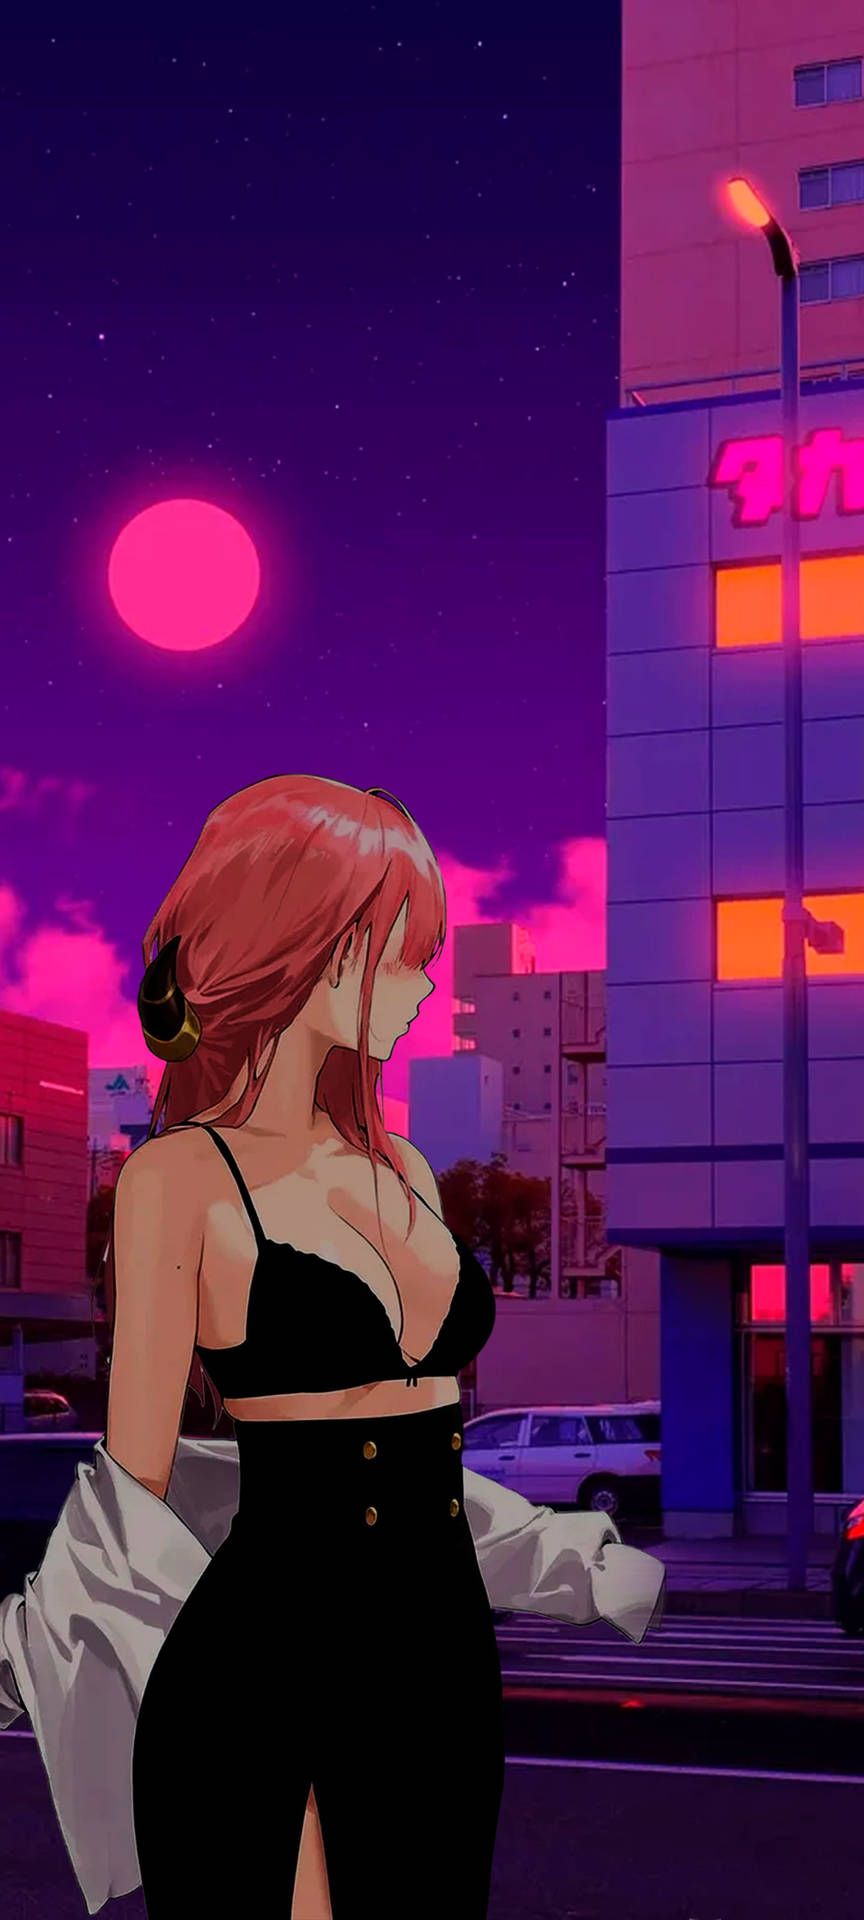 Download Aesthetic Anime Girl Magenta Wallpaper